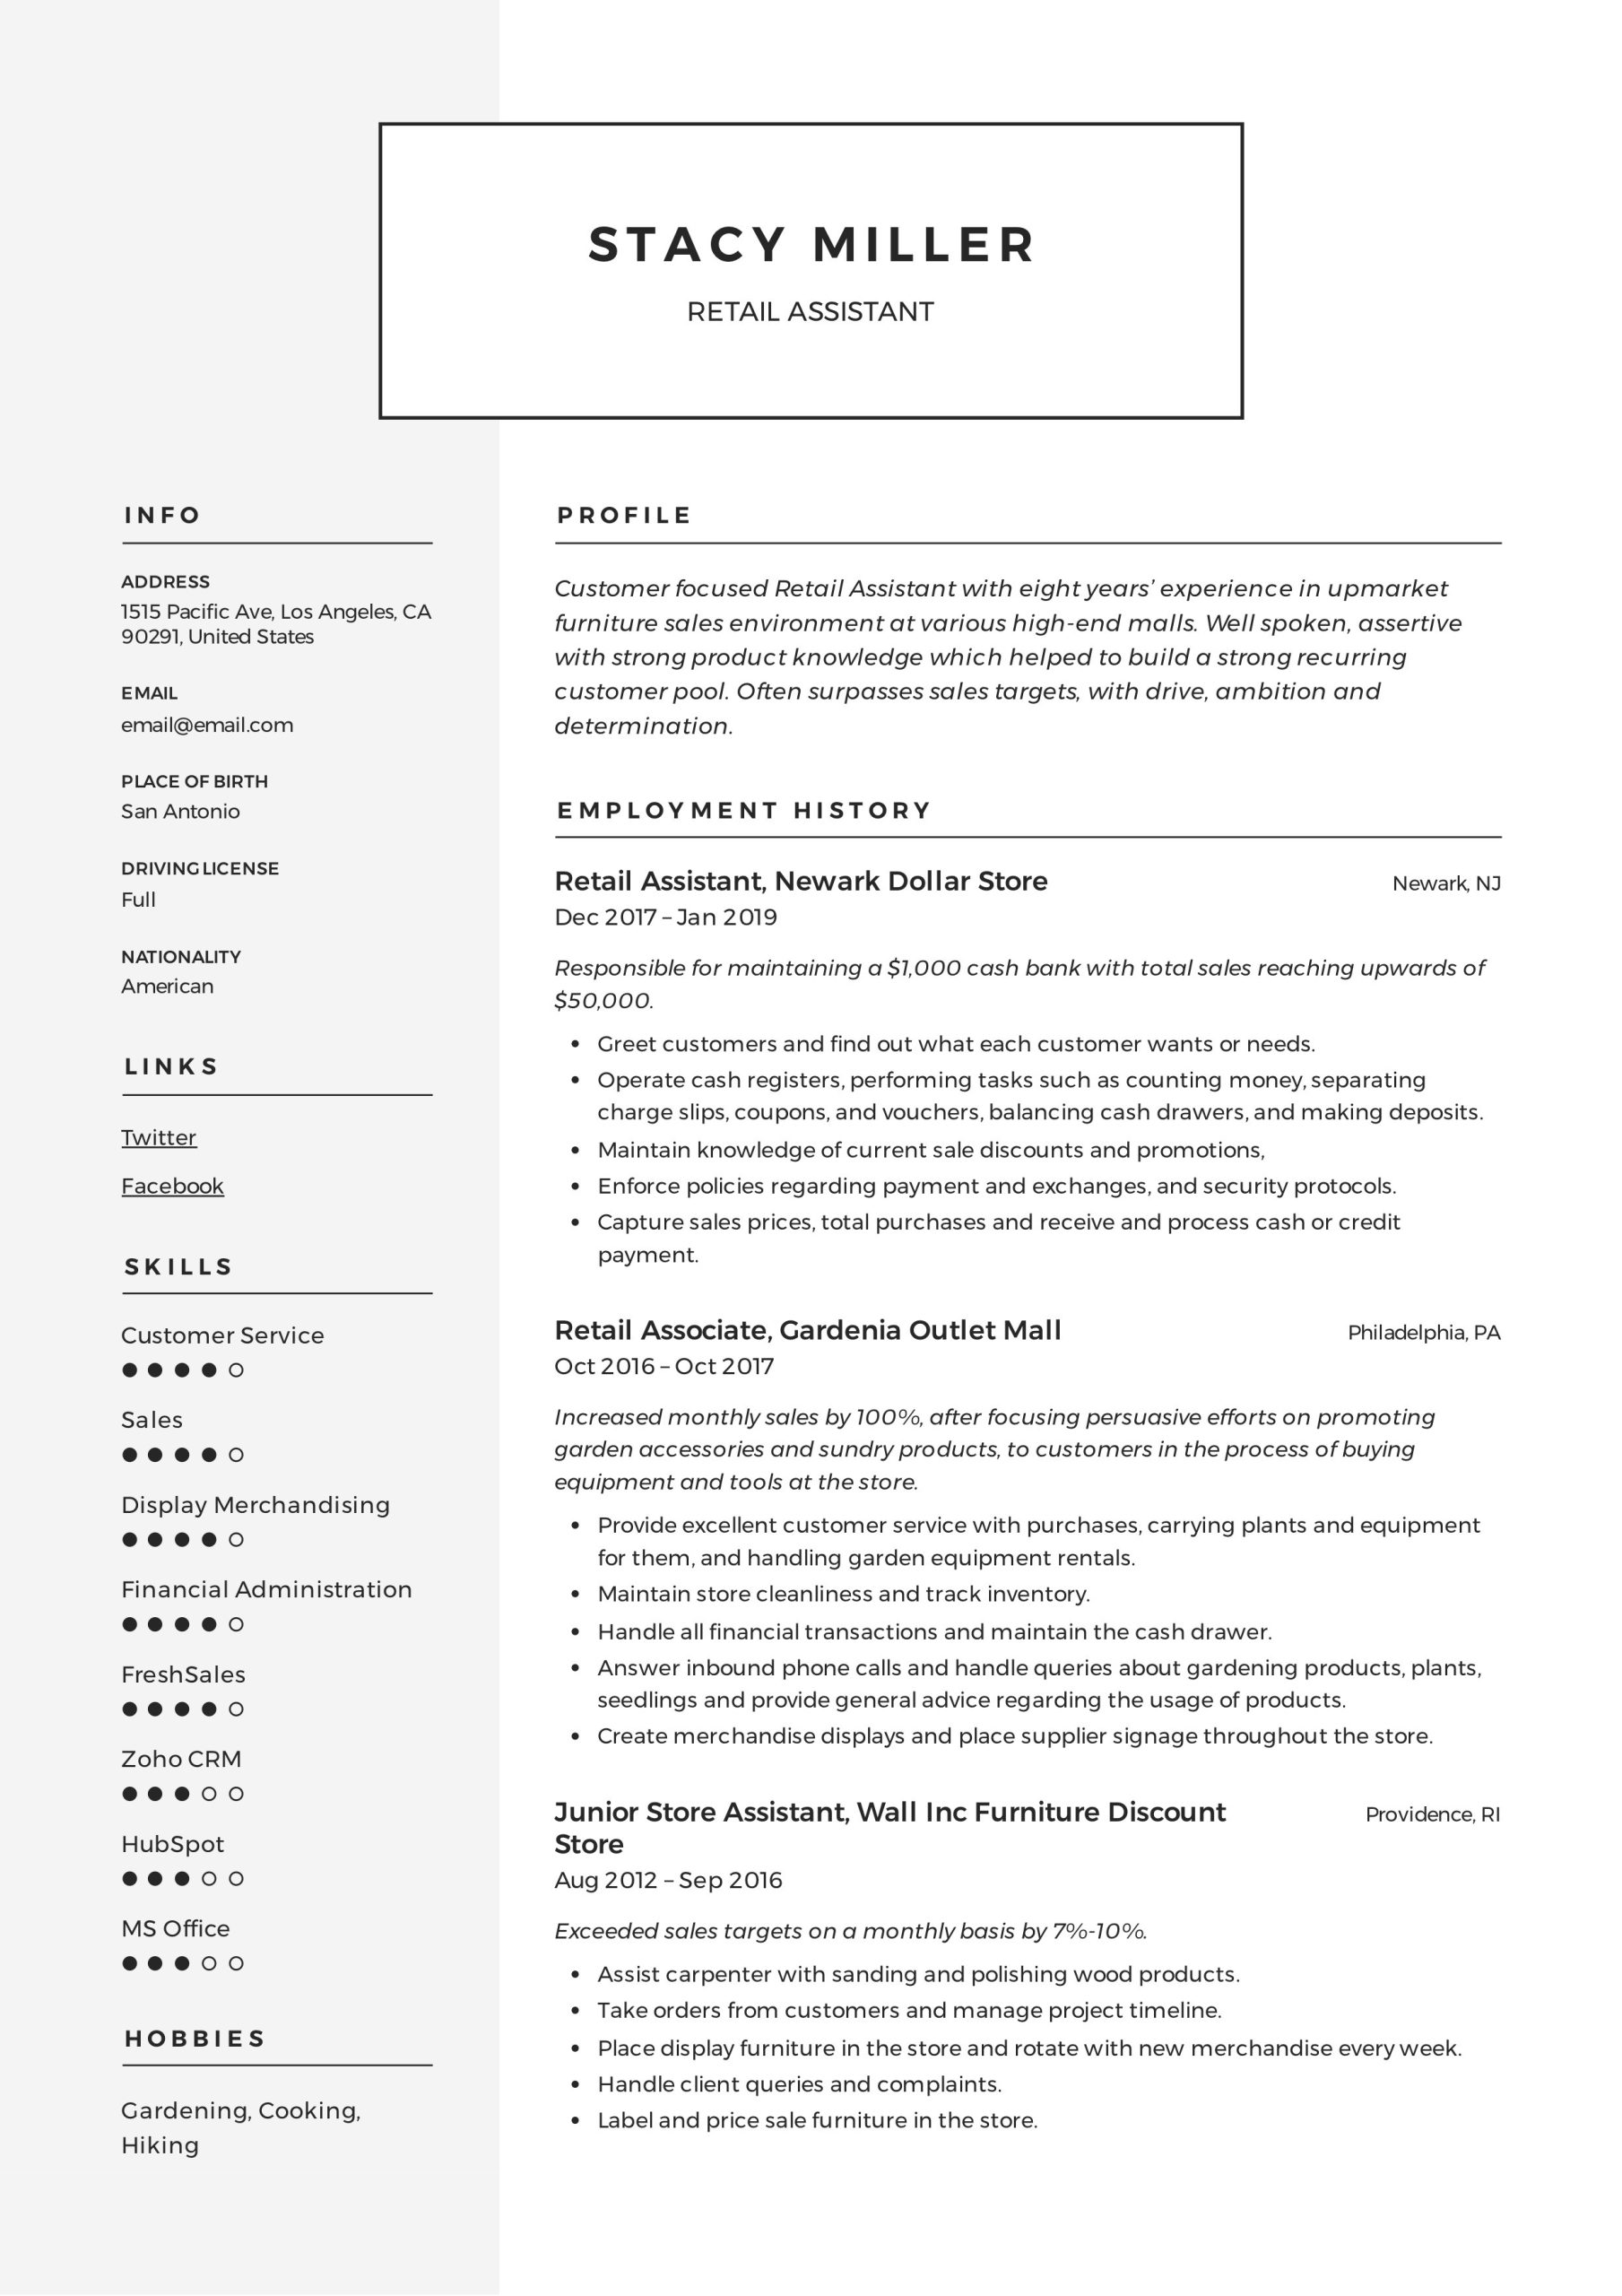 Sample Resume Retail Sales No Experience 12 Retail assistant Resume Samples & Writing Guide – Resumeviking.com